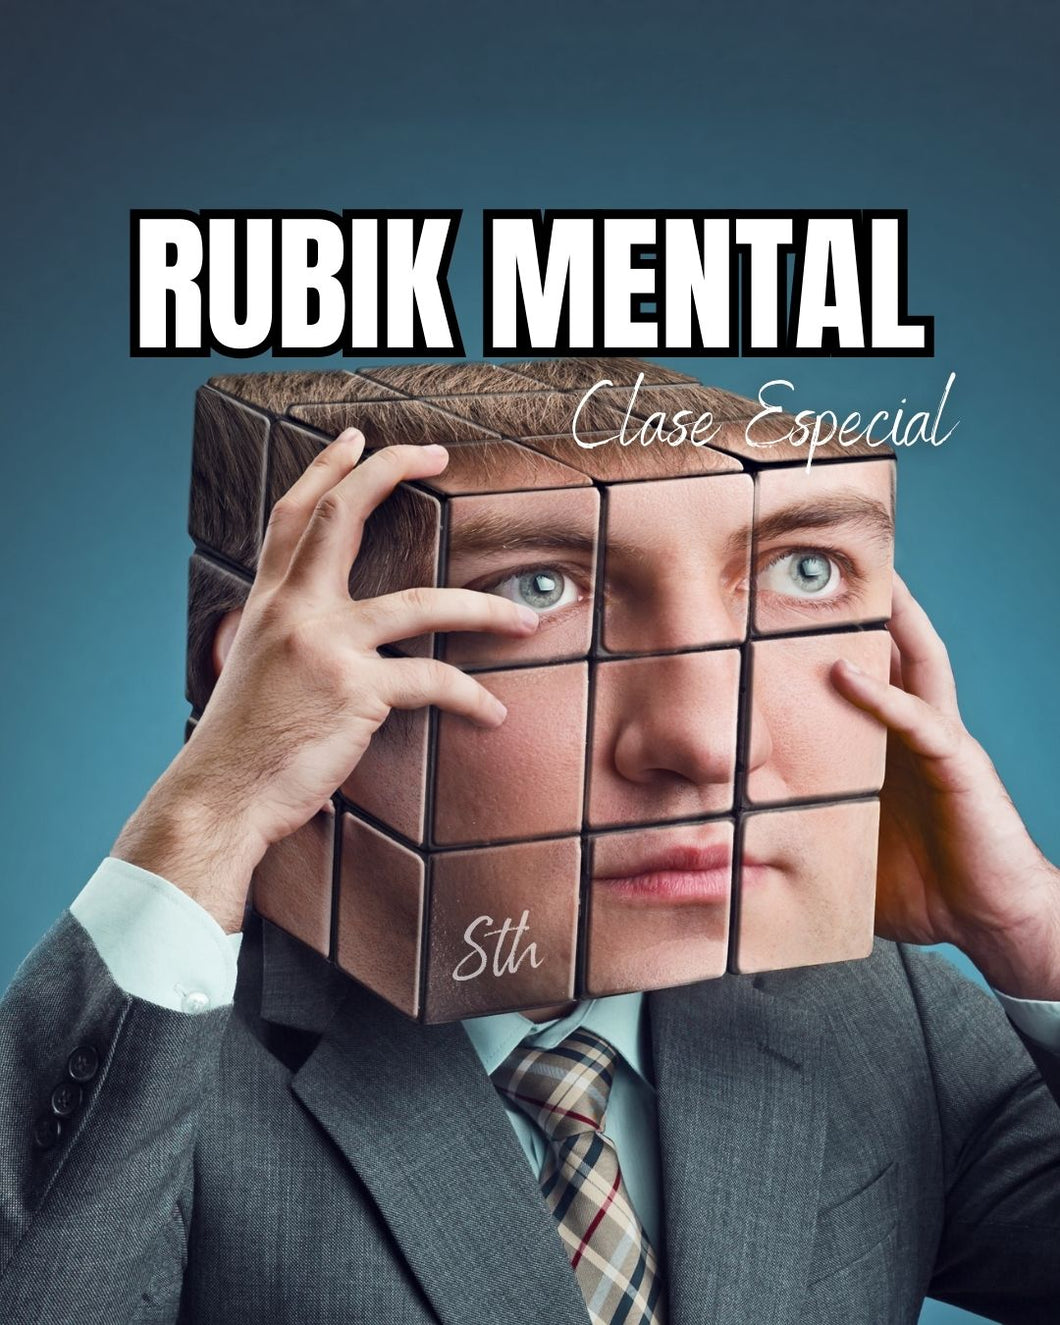 Rubik Mental - Clase Especial